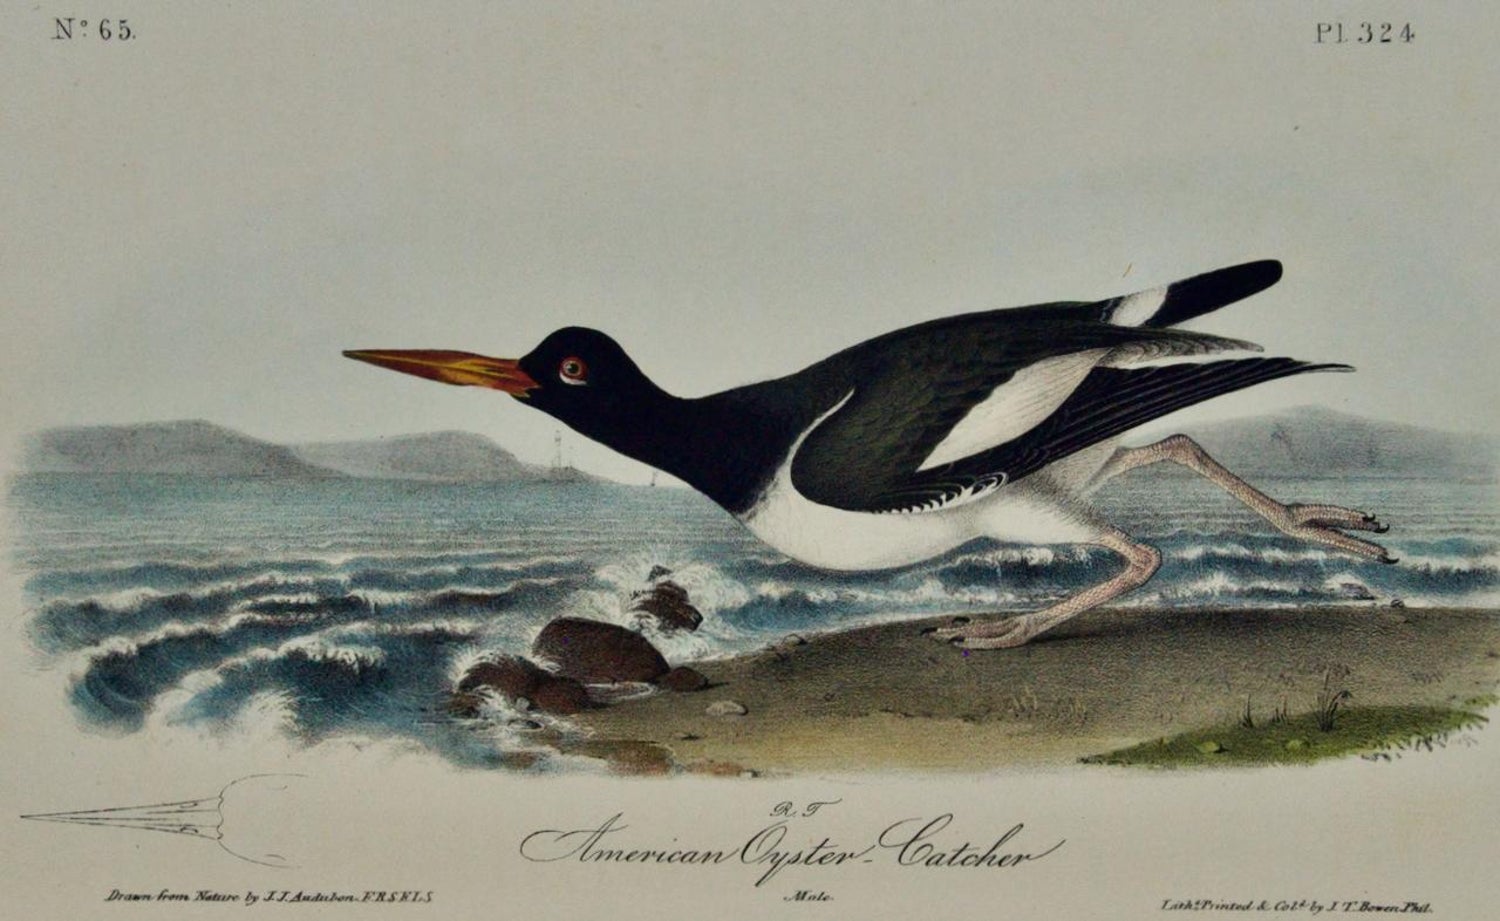 After John James Audubon - "American Oyster Catcher": An Original Audubon  Hand-colored Lithograph For Sale at 1stDibs